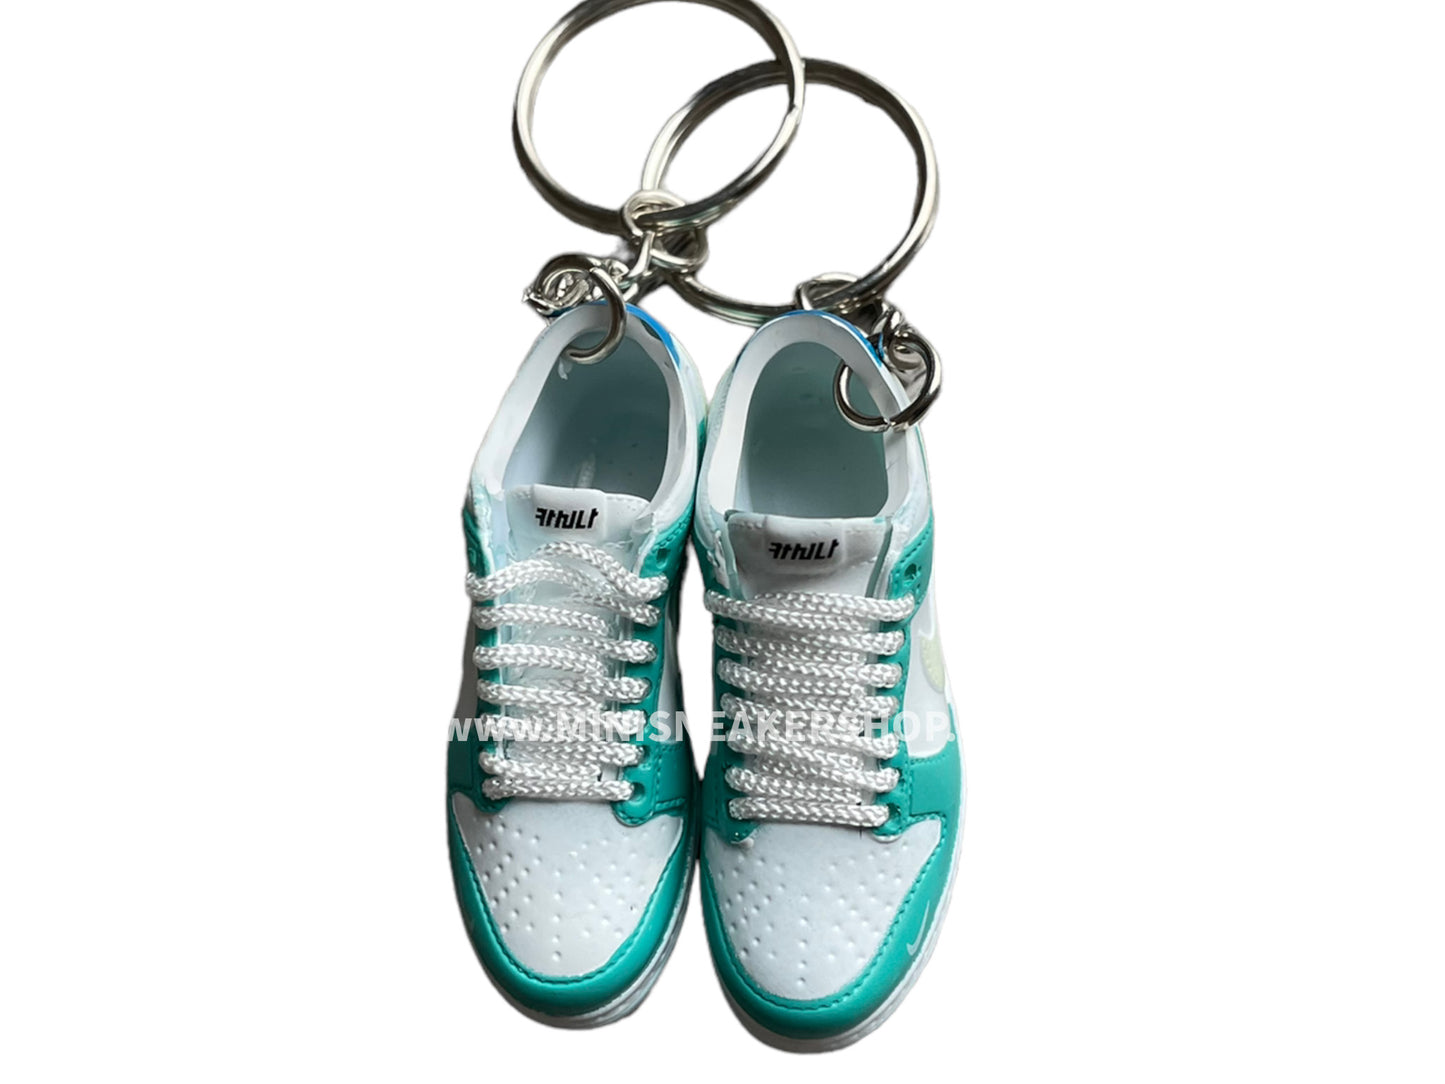 Mini sneaker keychain 3D Dunk - Slam Dunk - SEOUL